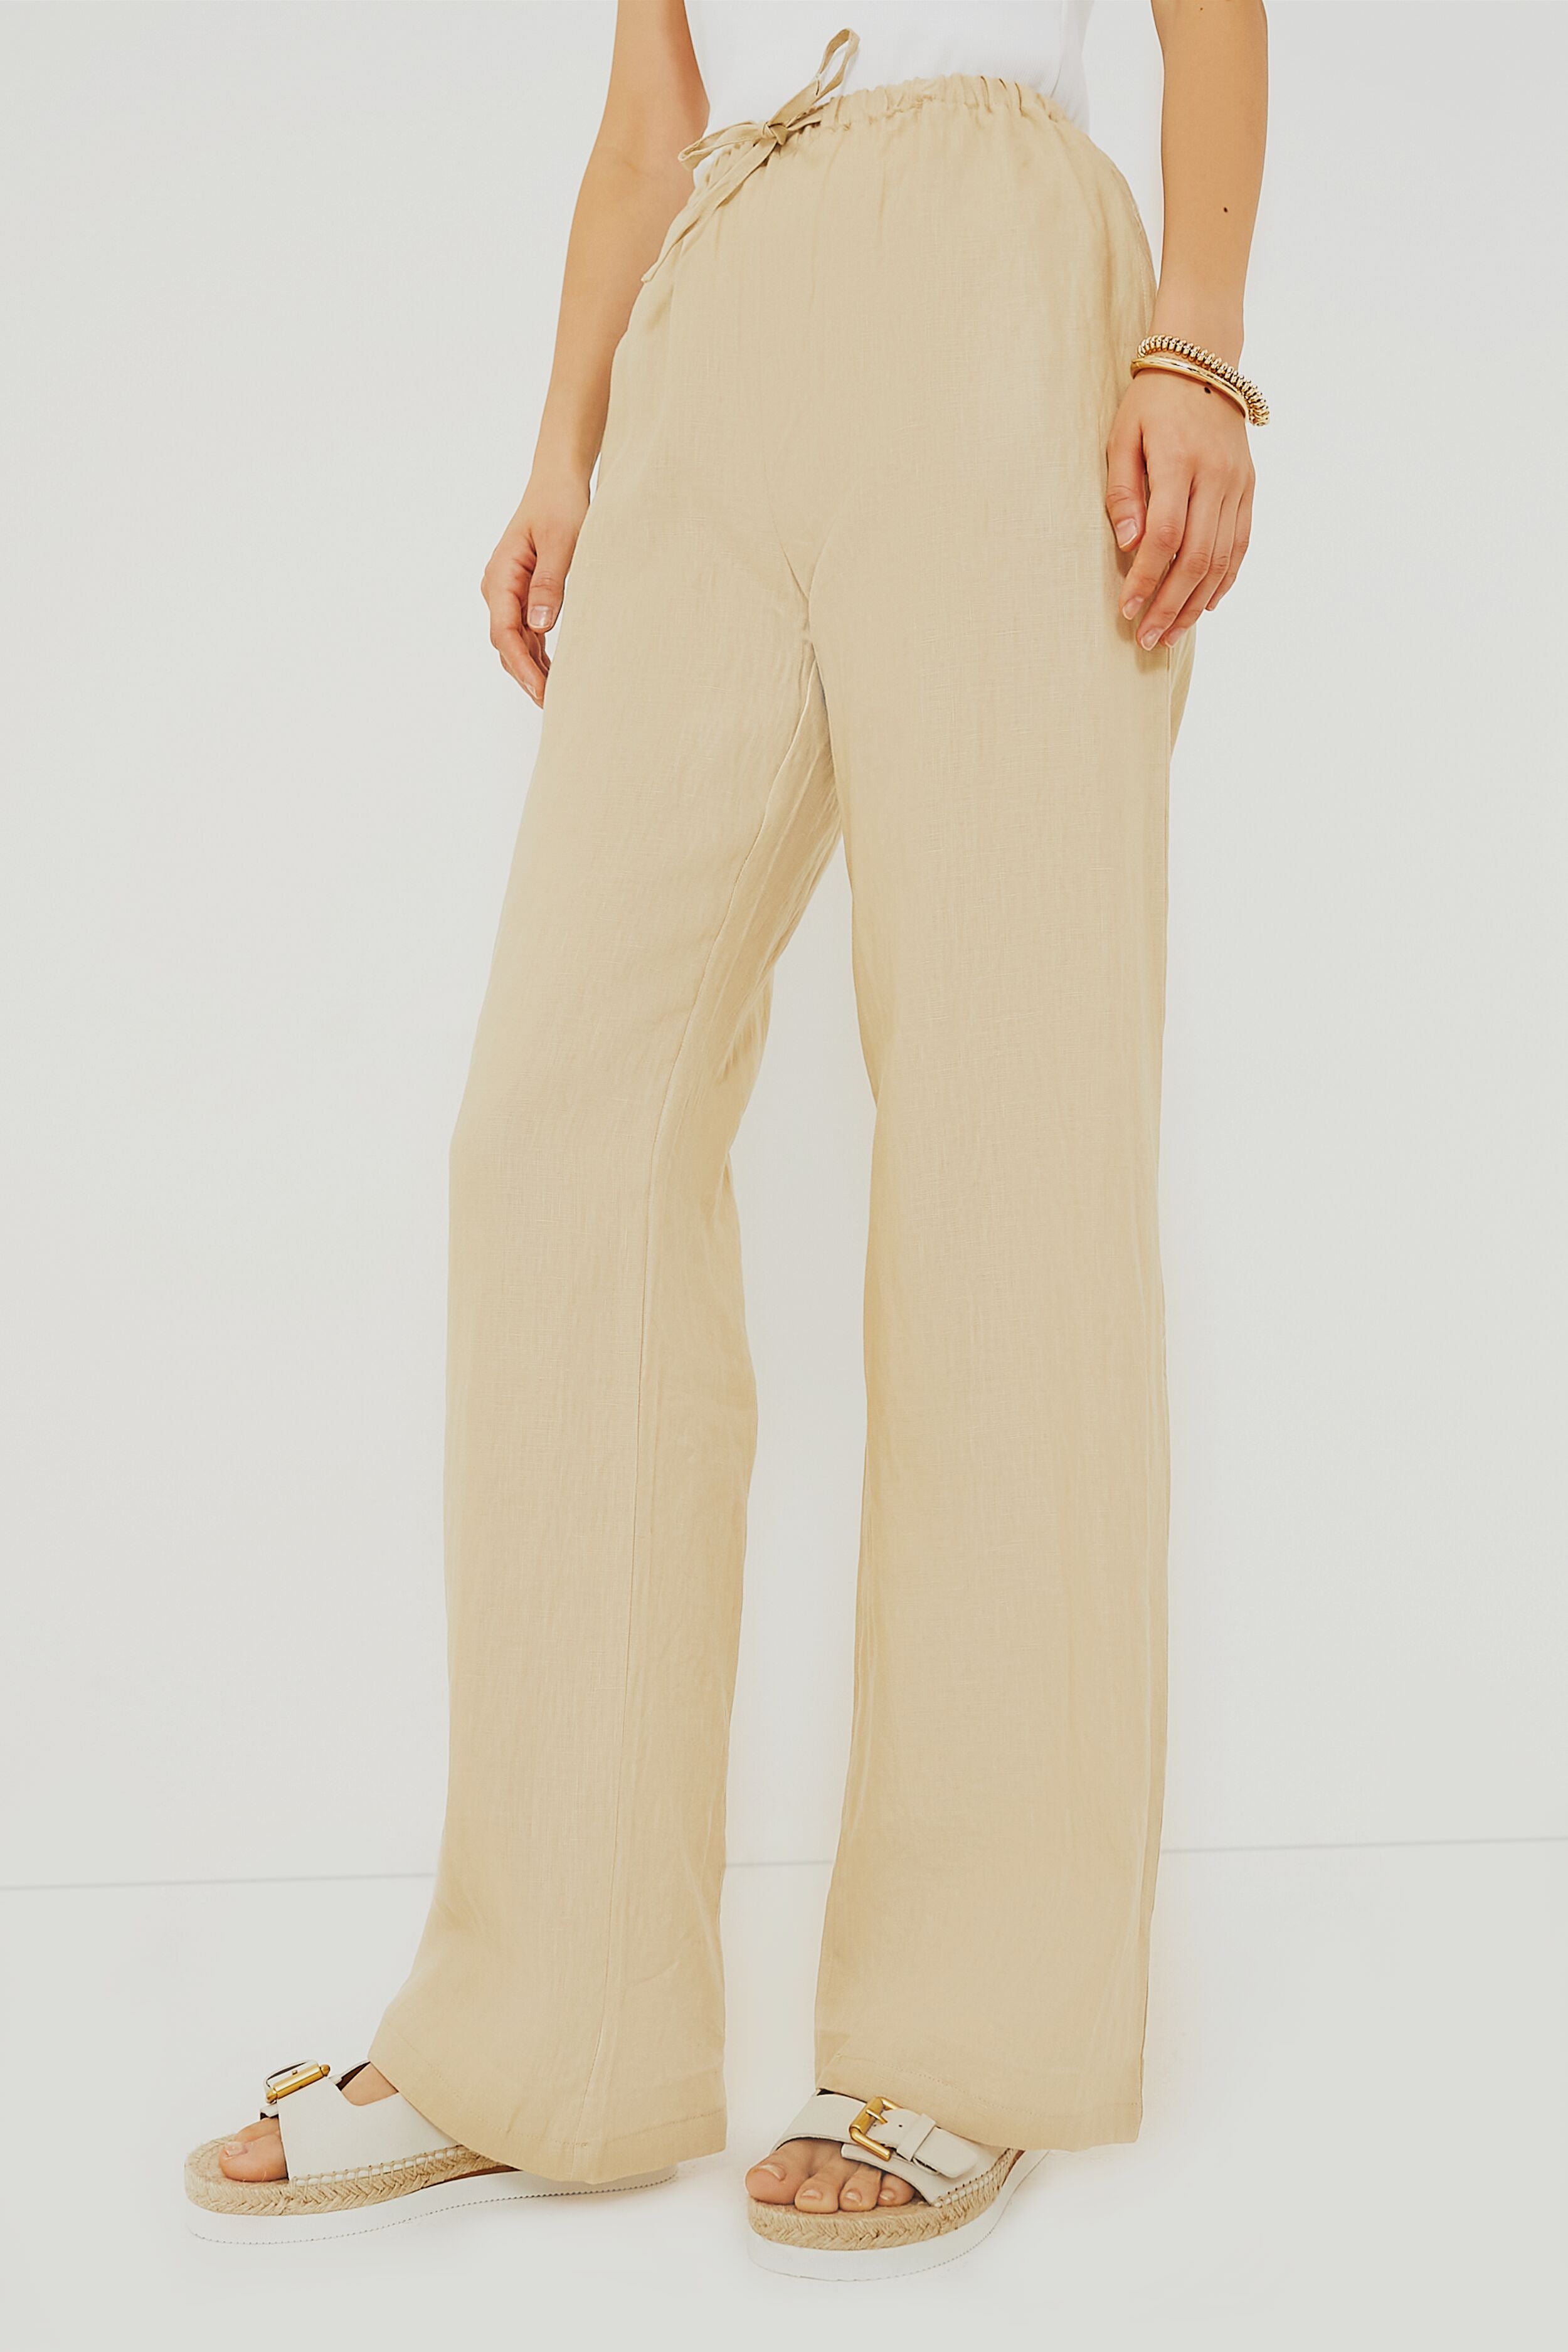 Amelis - Women's Leggings - Women's Tight Pants for Sport - Kaki Color  Select size XS